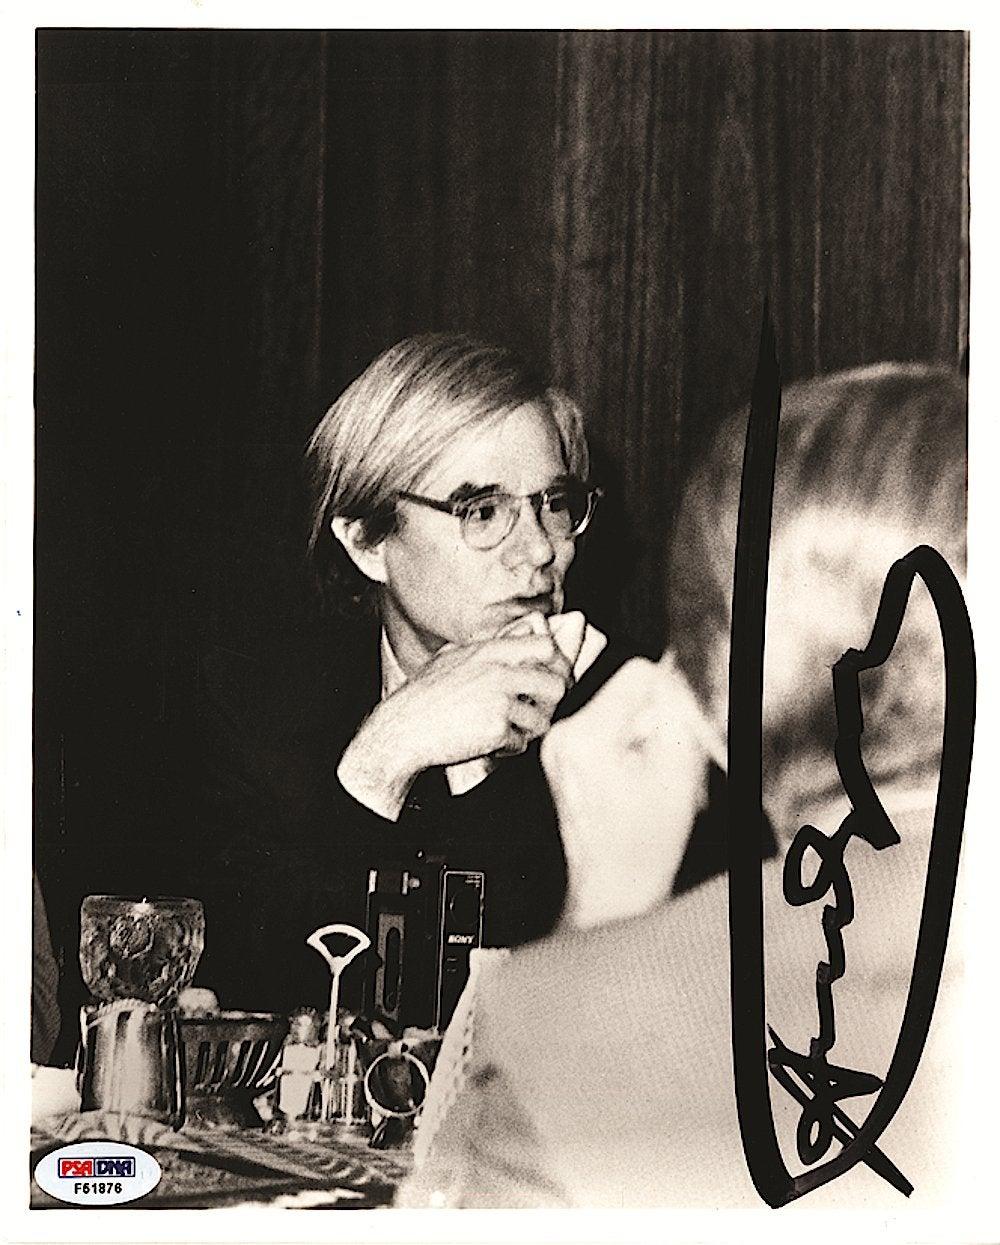 British Andy Warhol Original Signed Black and White Photograph, 20th Century